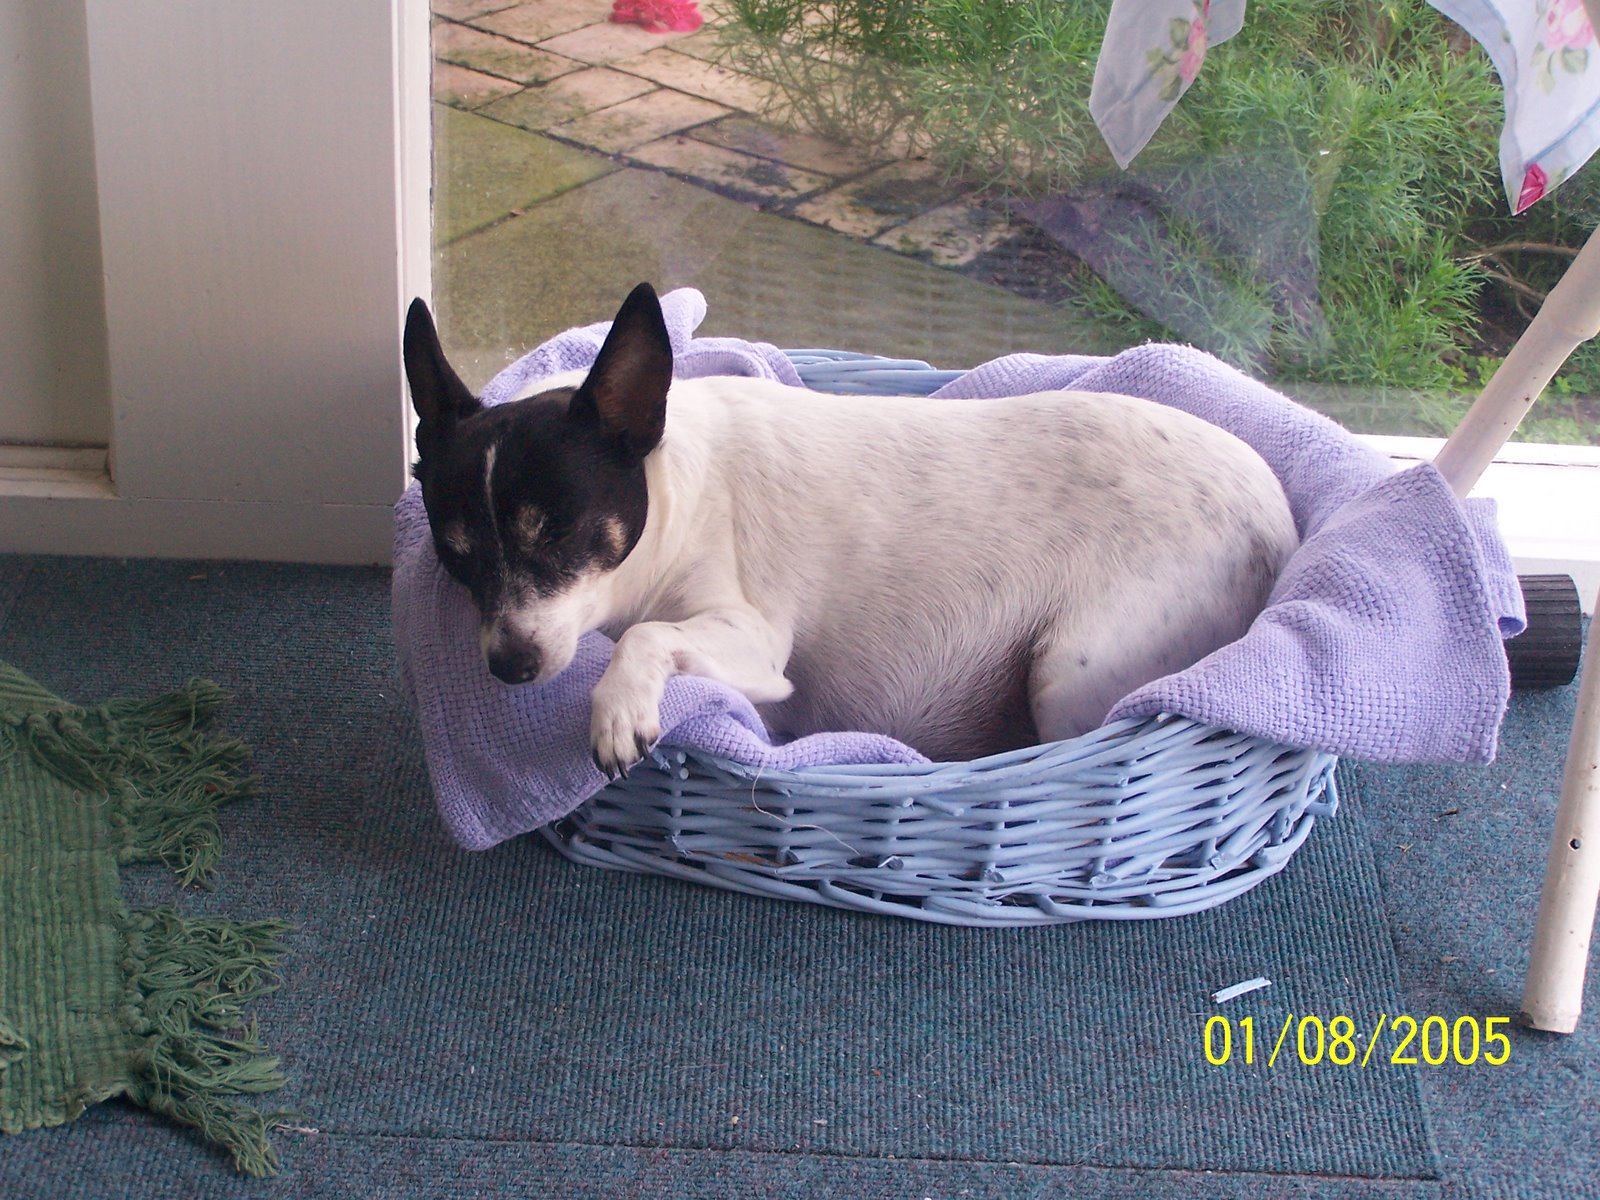 [Trixie+lying+in+her+basket.JPG]